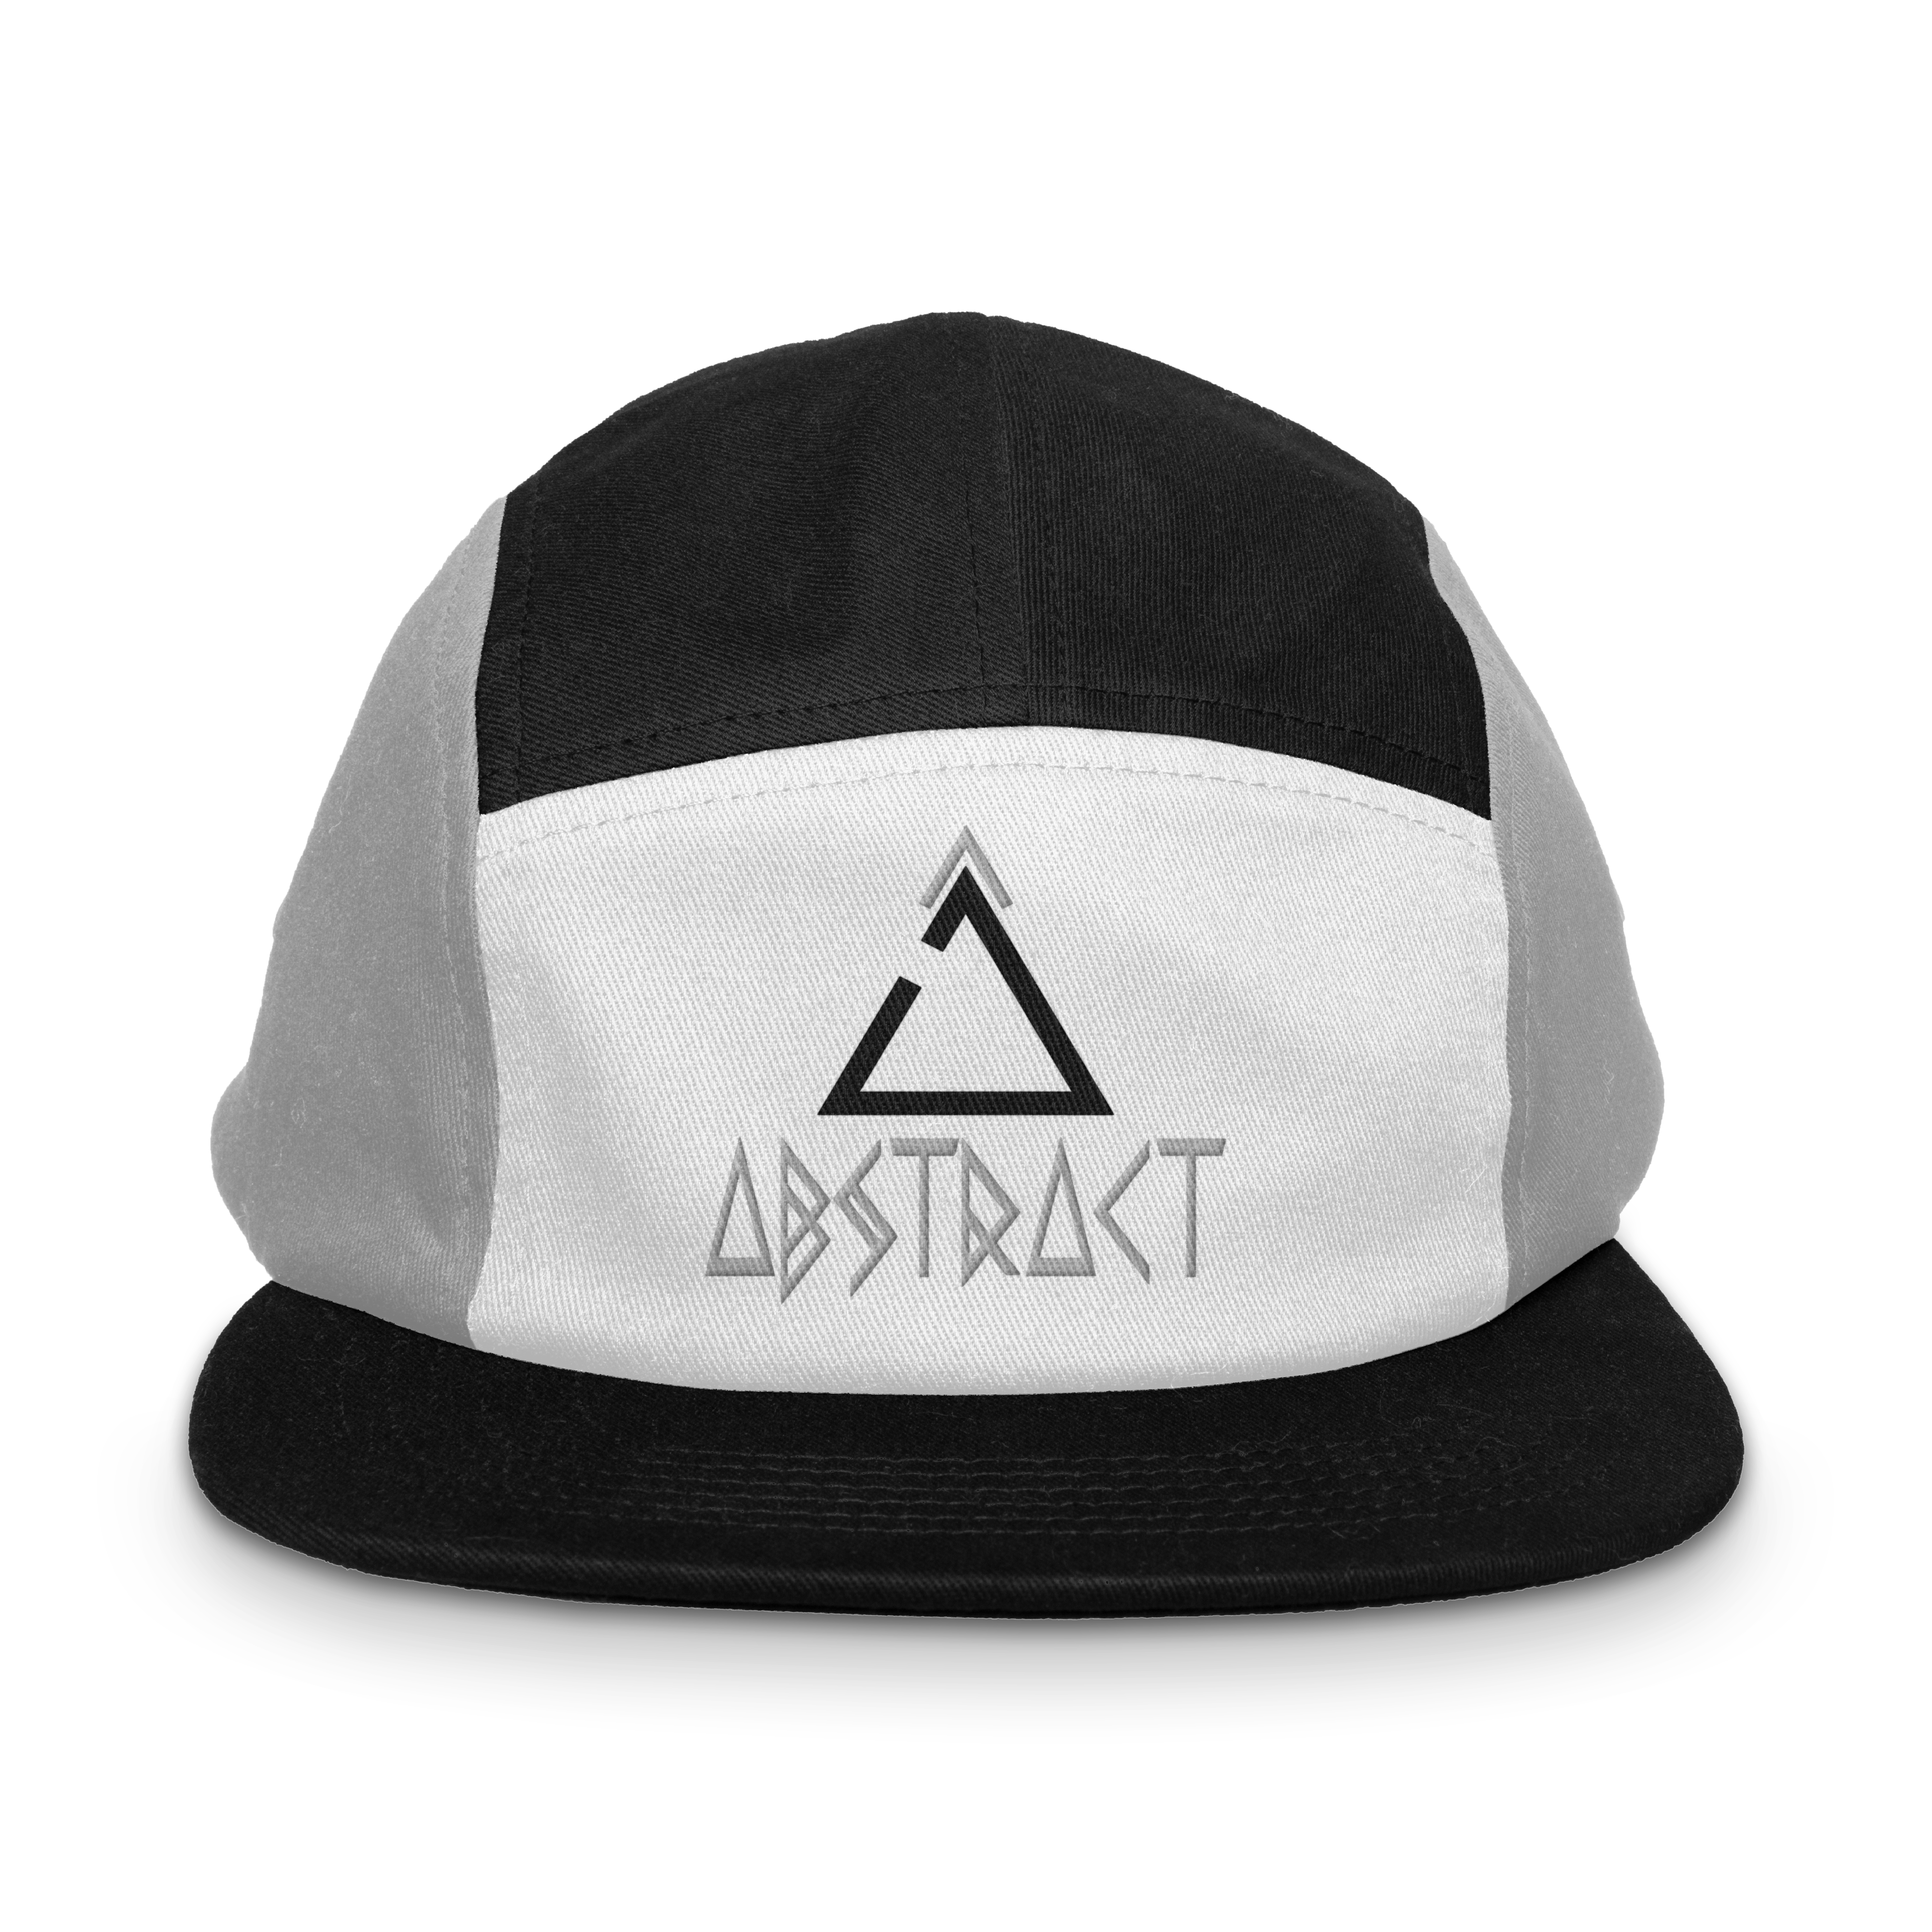 Open Delta Hat Hats Black/White/Gray / One Size Black